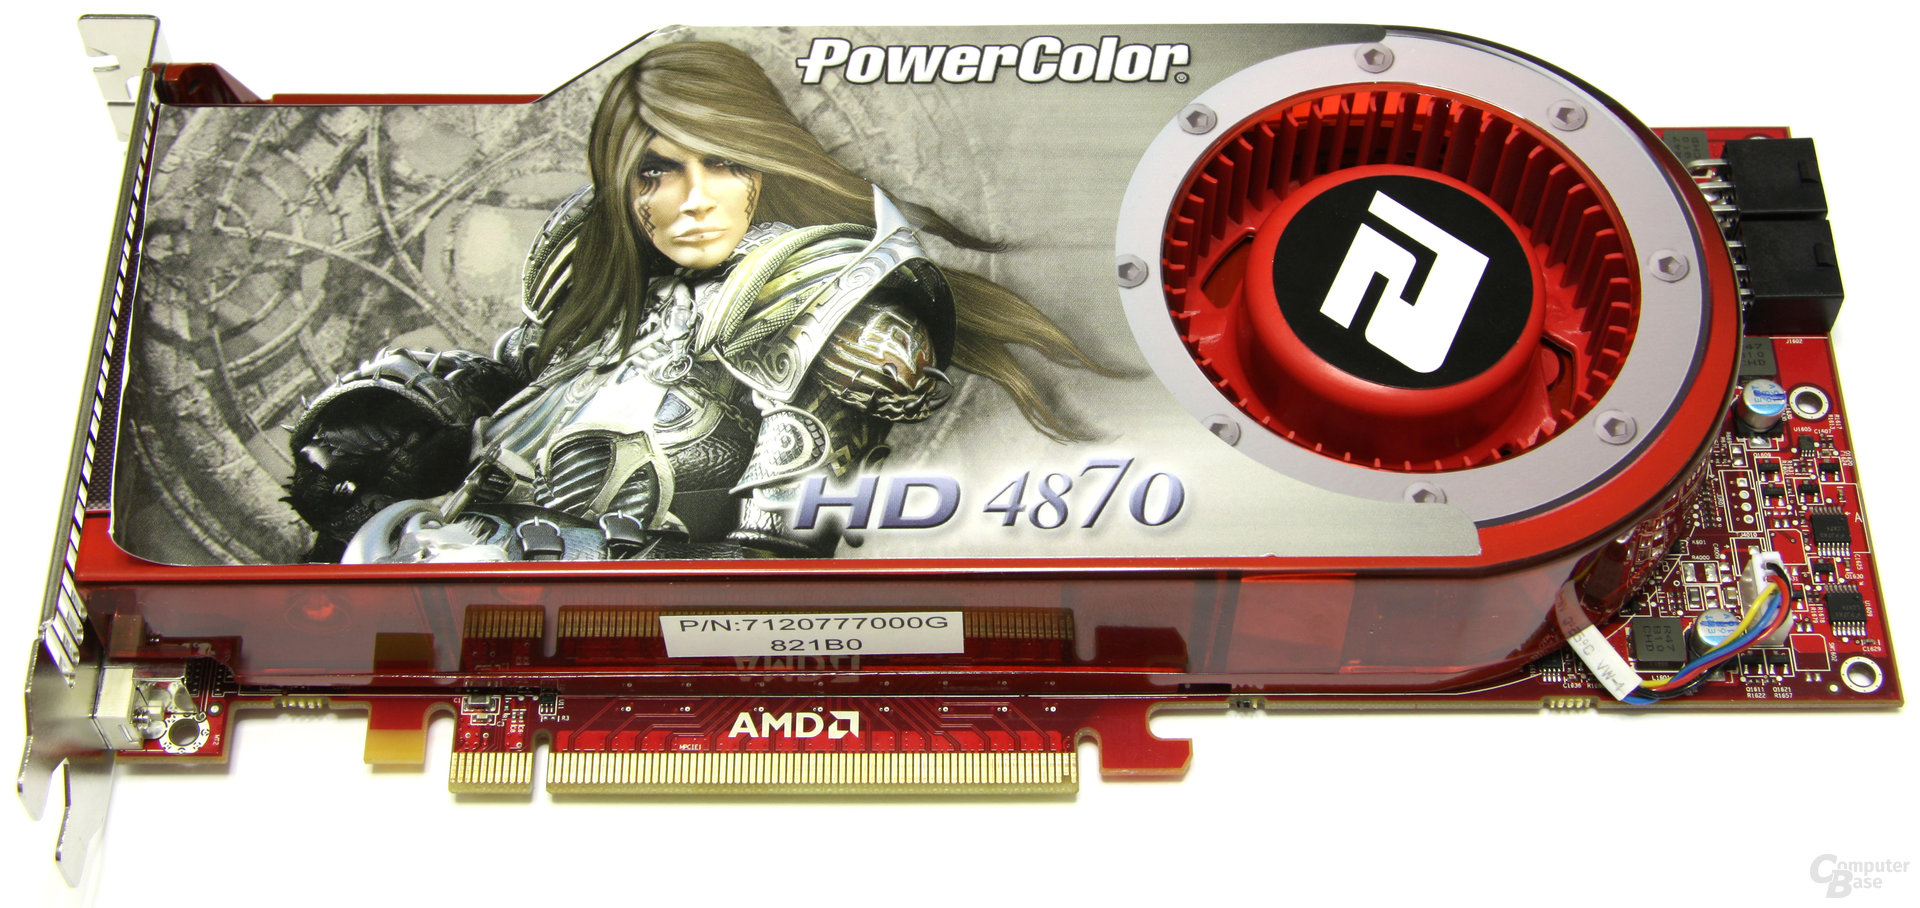 PowerColor Radeon HD 4870